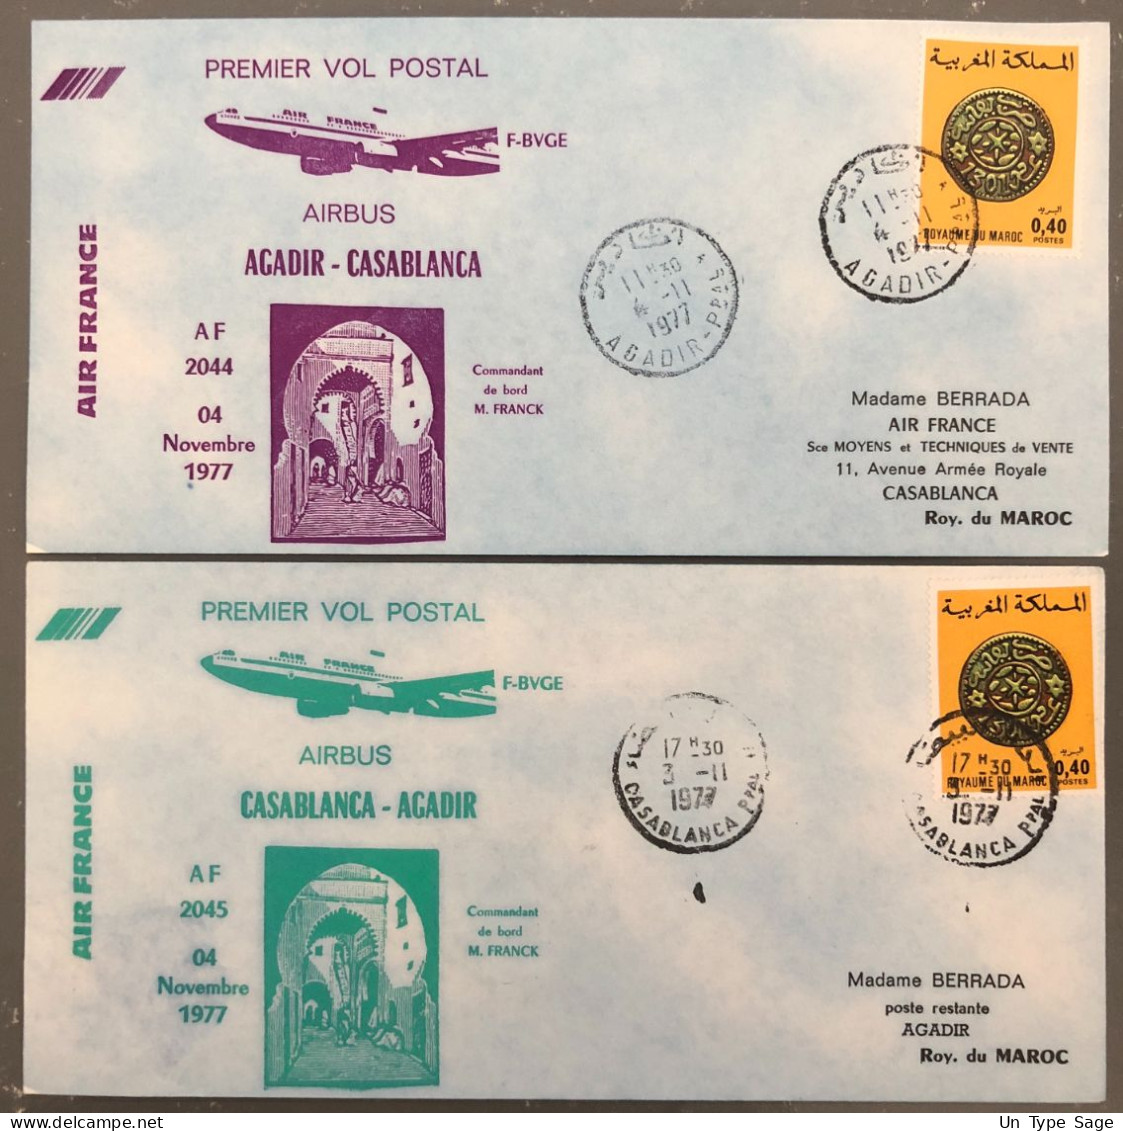 France, Premier Vol (Air France) Casablanca, Agdir, 4.11.1977 - 2 Enveloppes - (B1493) - First Flight Covers